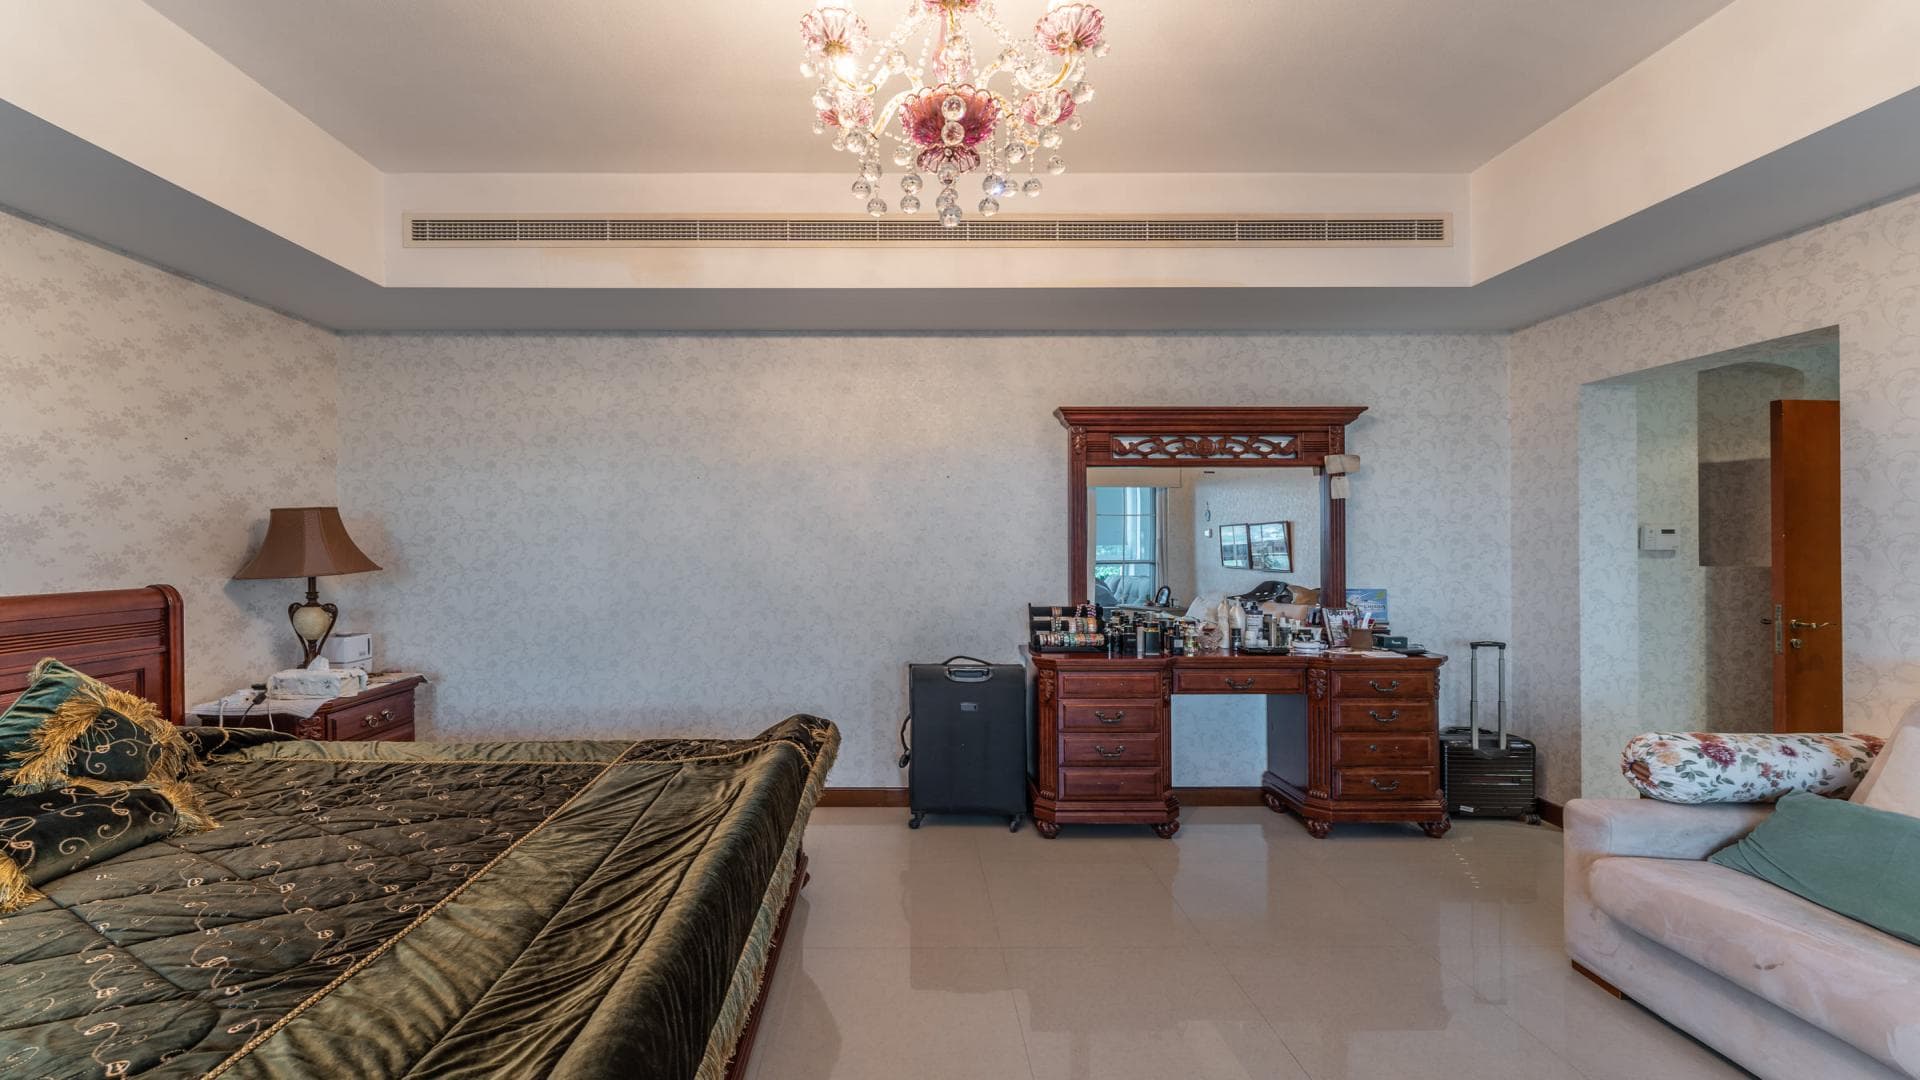 5 Bedroom Villa For Sale Sienna Views Lp32774 E63beb0374fd100.jpg